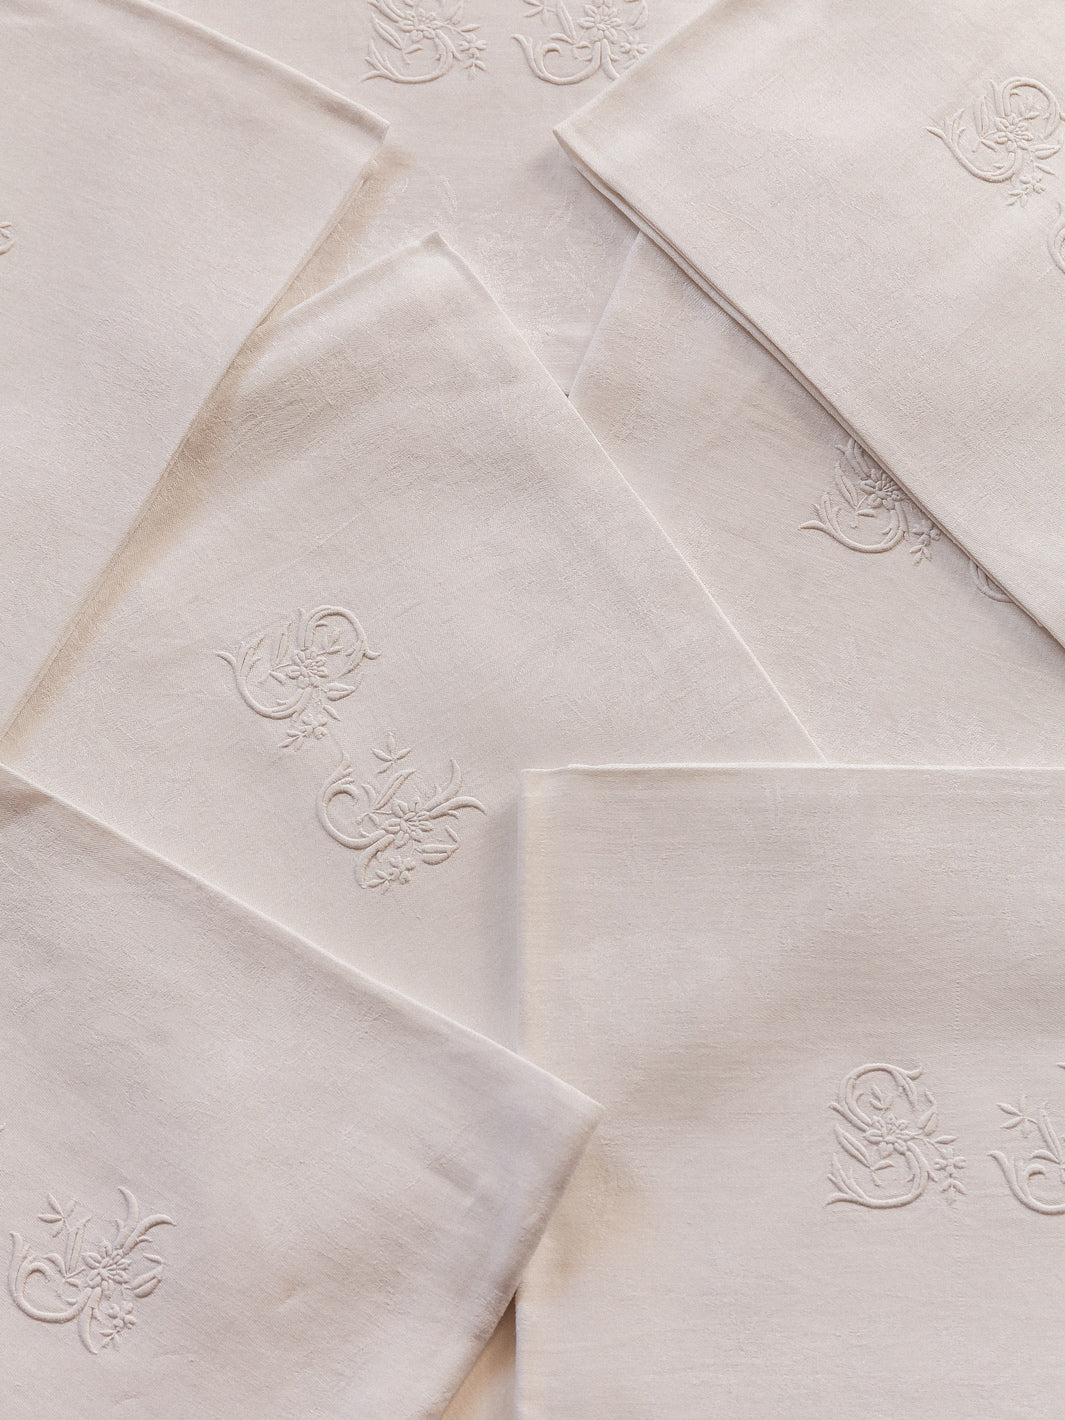 Set of 8 white damask napkins "SJ"